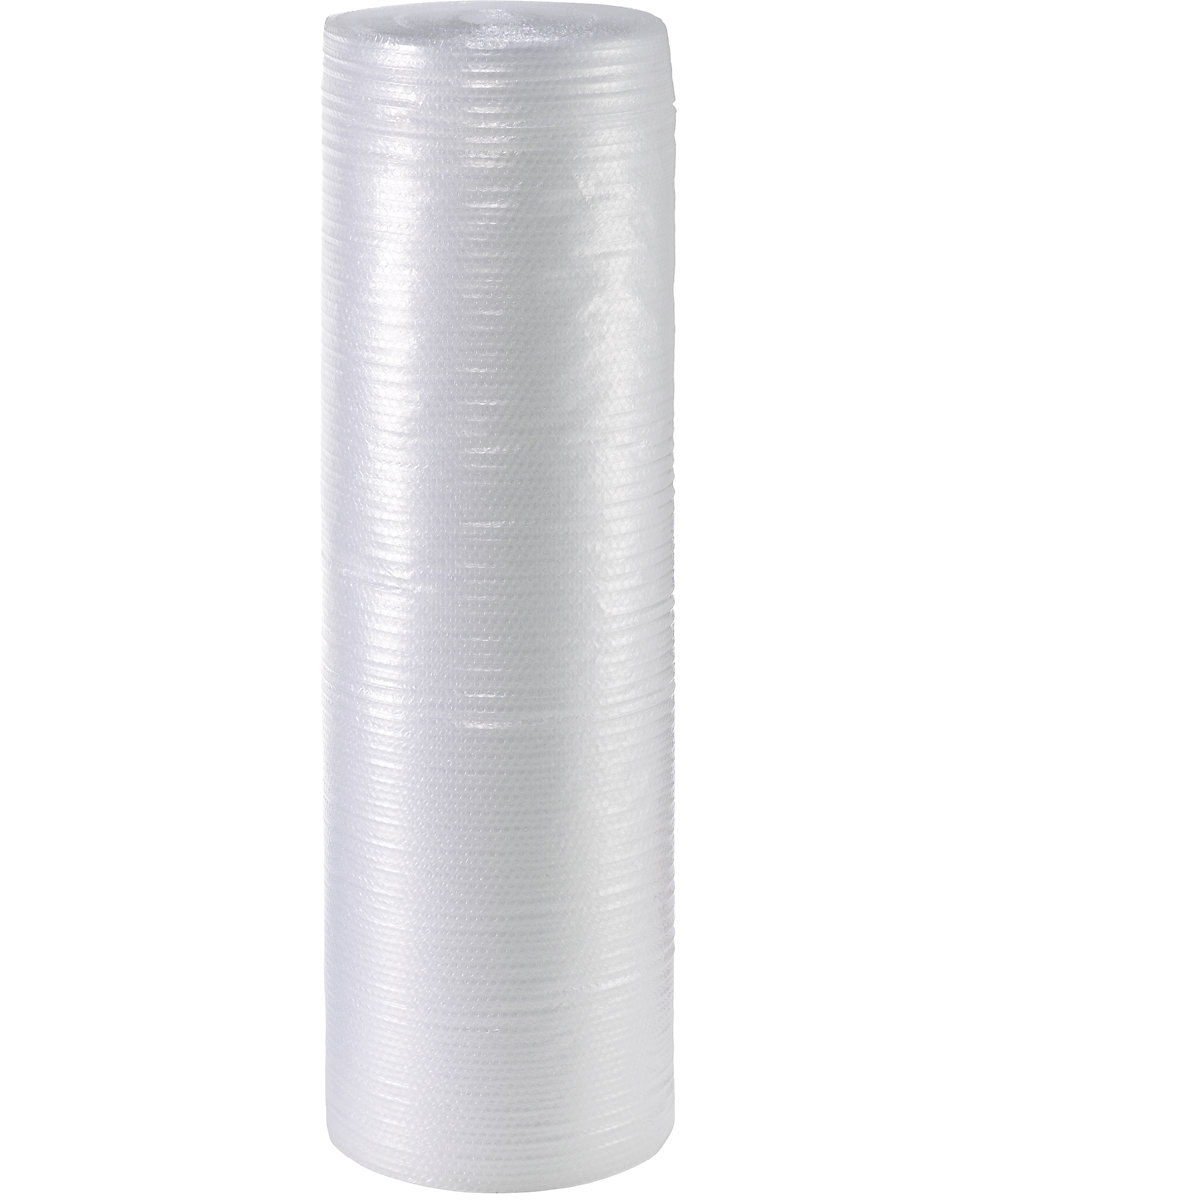 Bubble wrap film, 2-ply – eurokraft basic, film thickness 50 µm, width 1500 mm, 5+ items-7